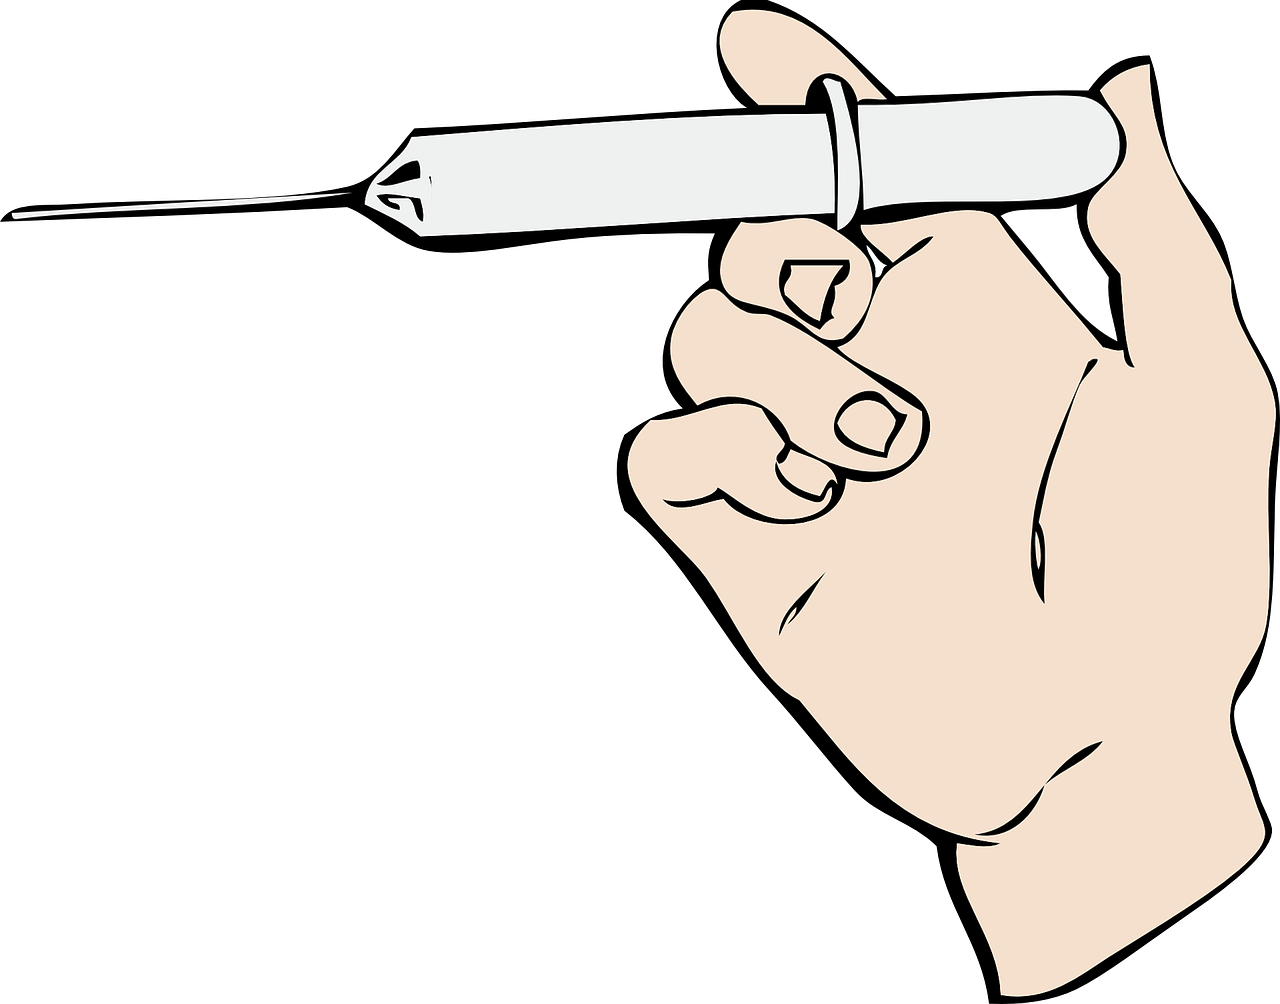 cartoon hand with needle and syringe